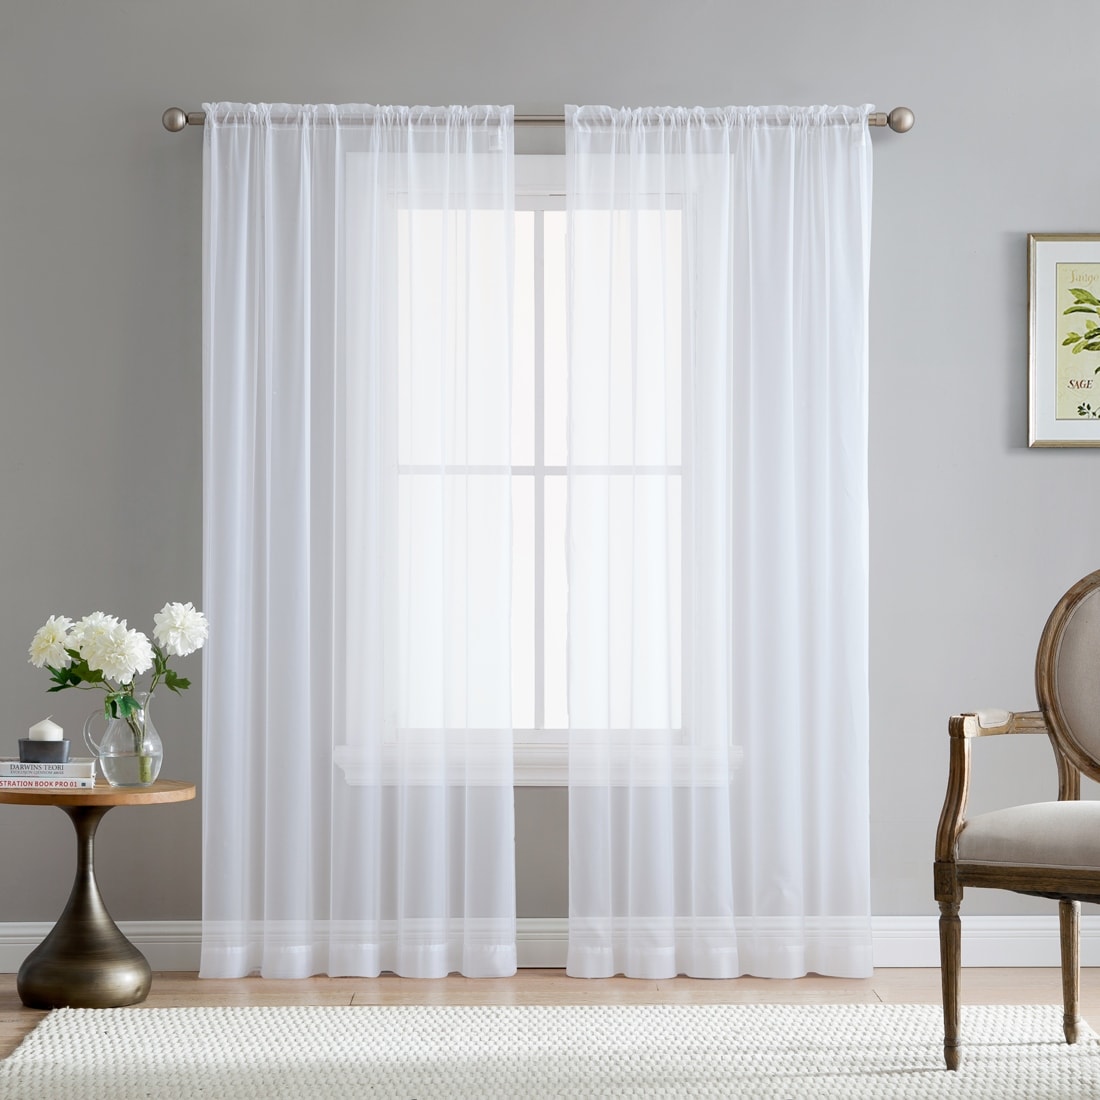 Home & Linens Sheer Voile Window Treatment Rod Pocket Curtain Panels for Bedroom, Living Room, Kitchen - Set of 2 panels